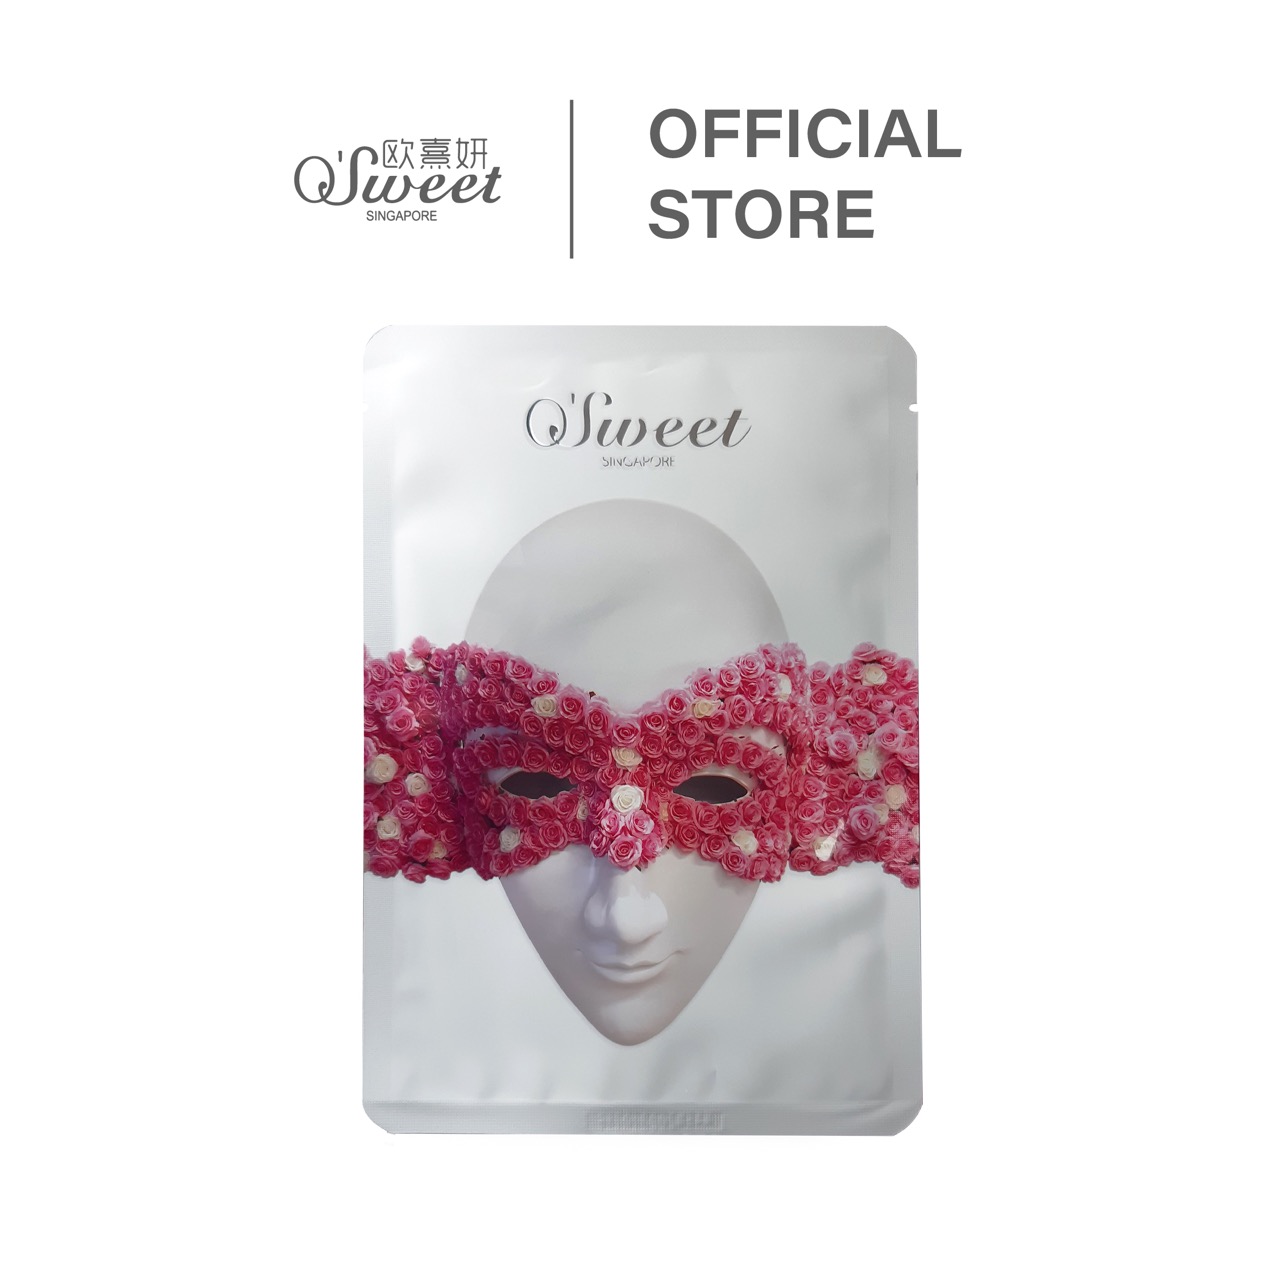 O'Sweet Singapore Rose Essence Brightening Mask 1 Pcs